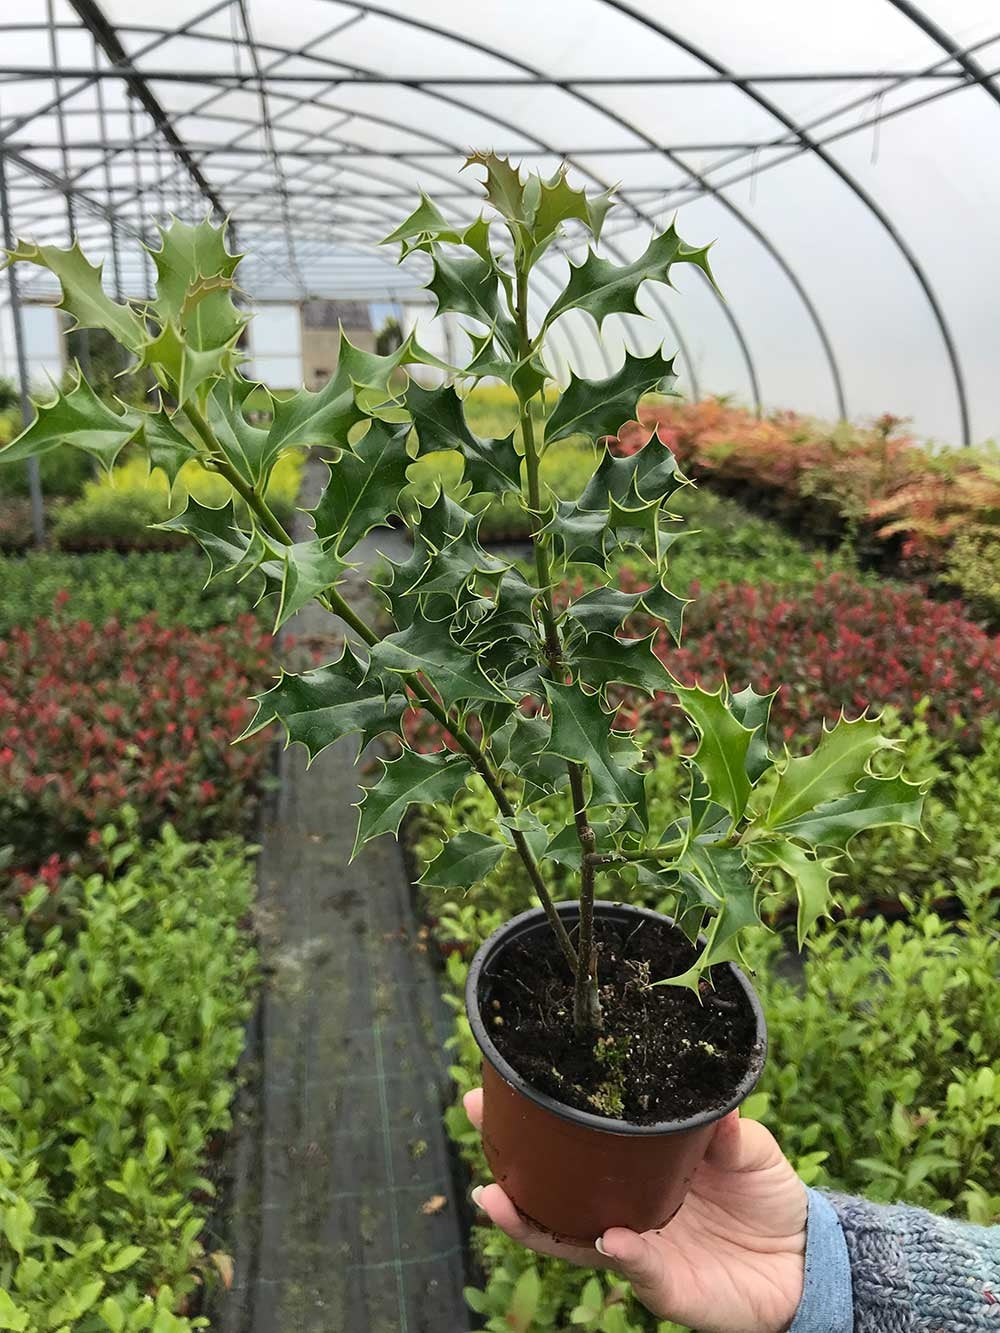 10 Holly Hedging Plants - Ilex Aquifolium Alaska - Evergreen - apx 25-35cm in Pots